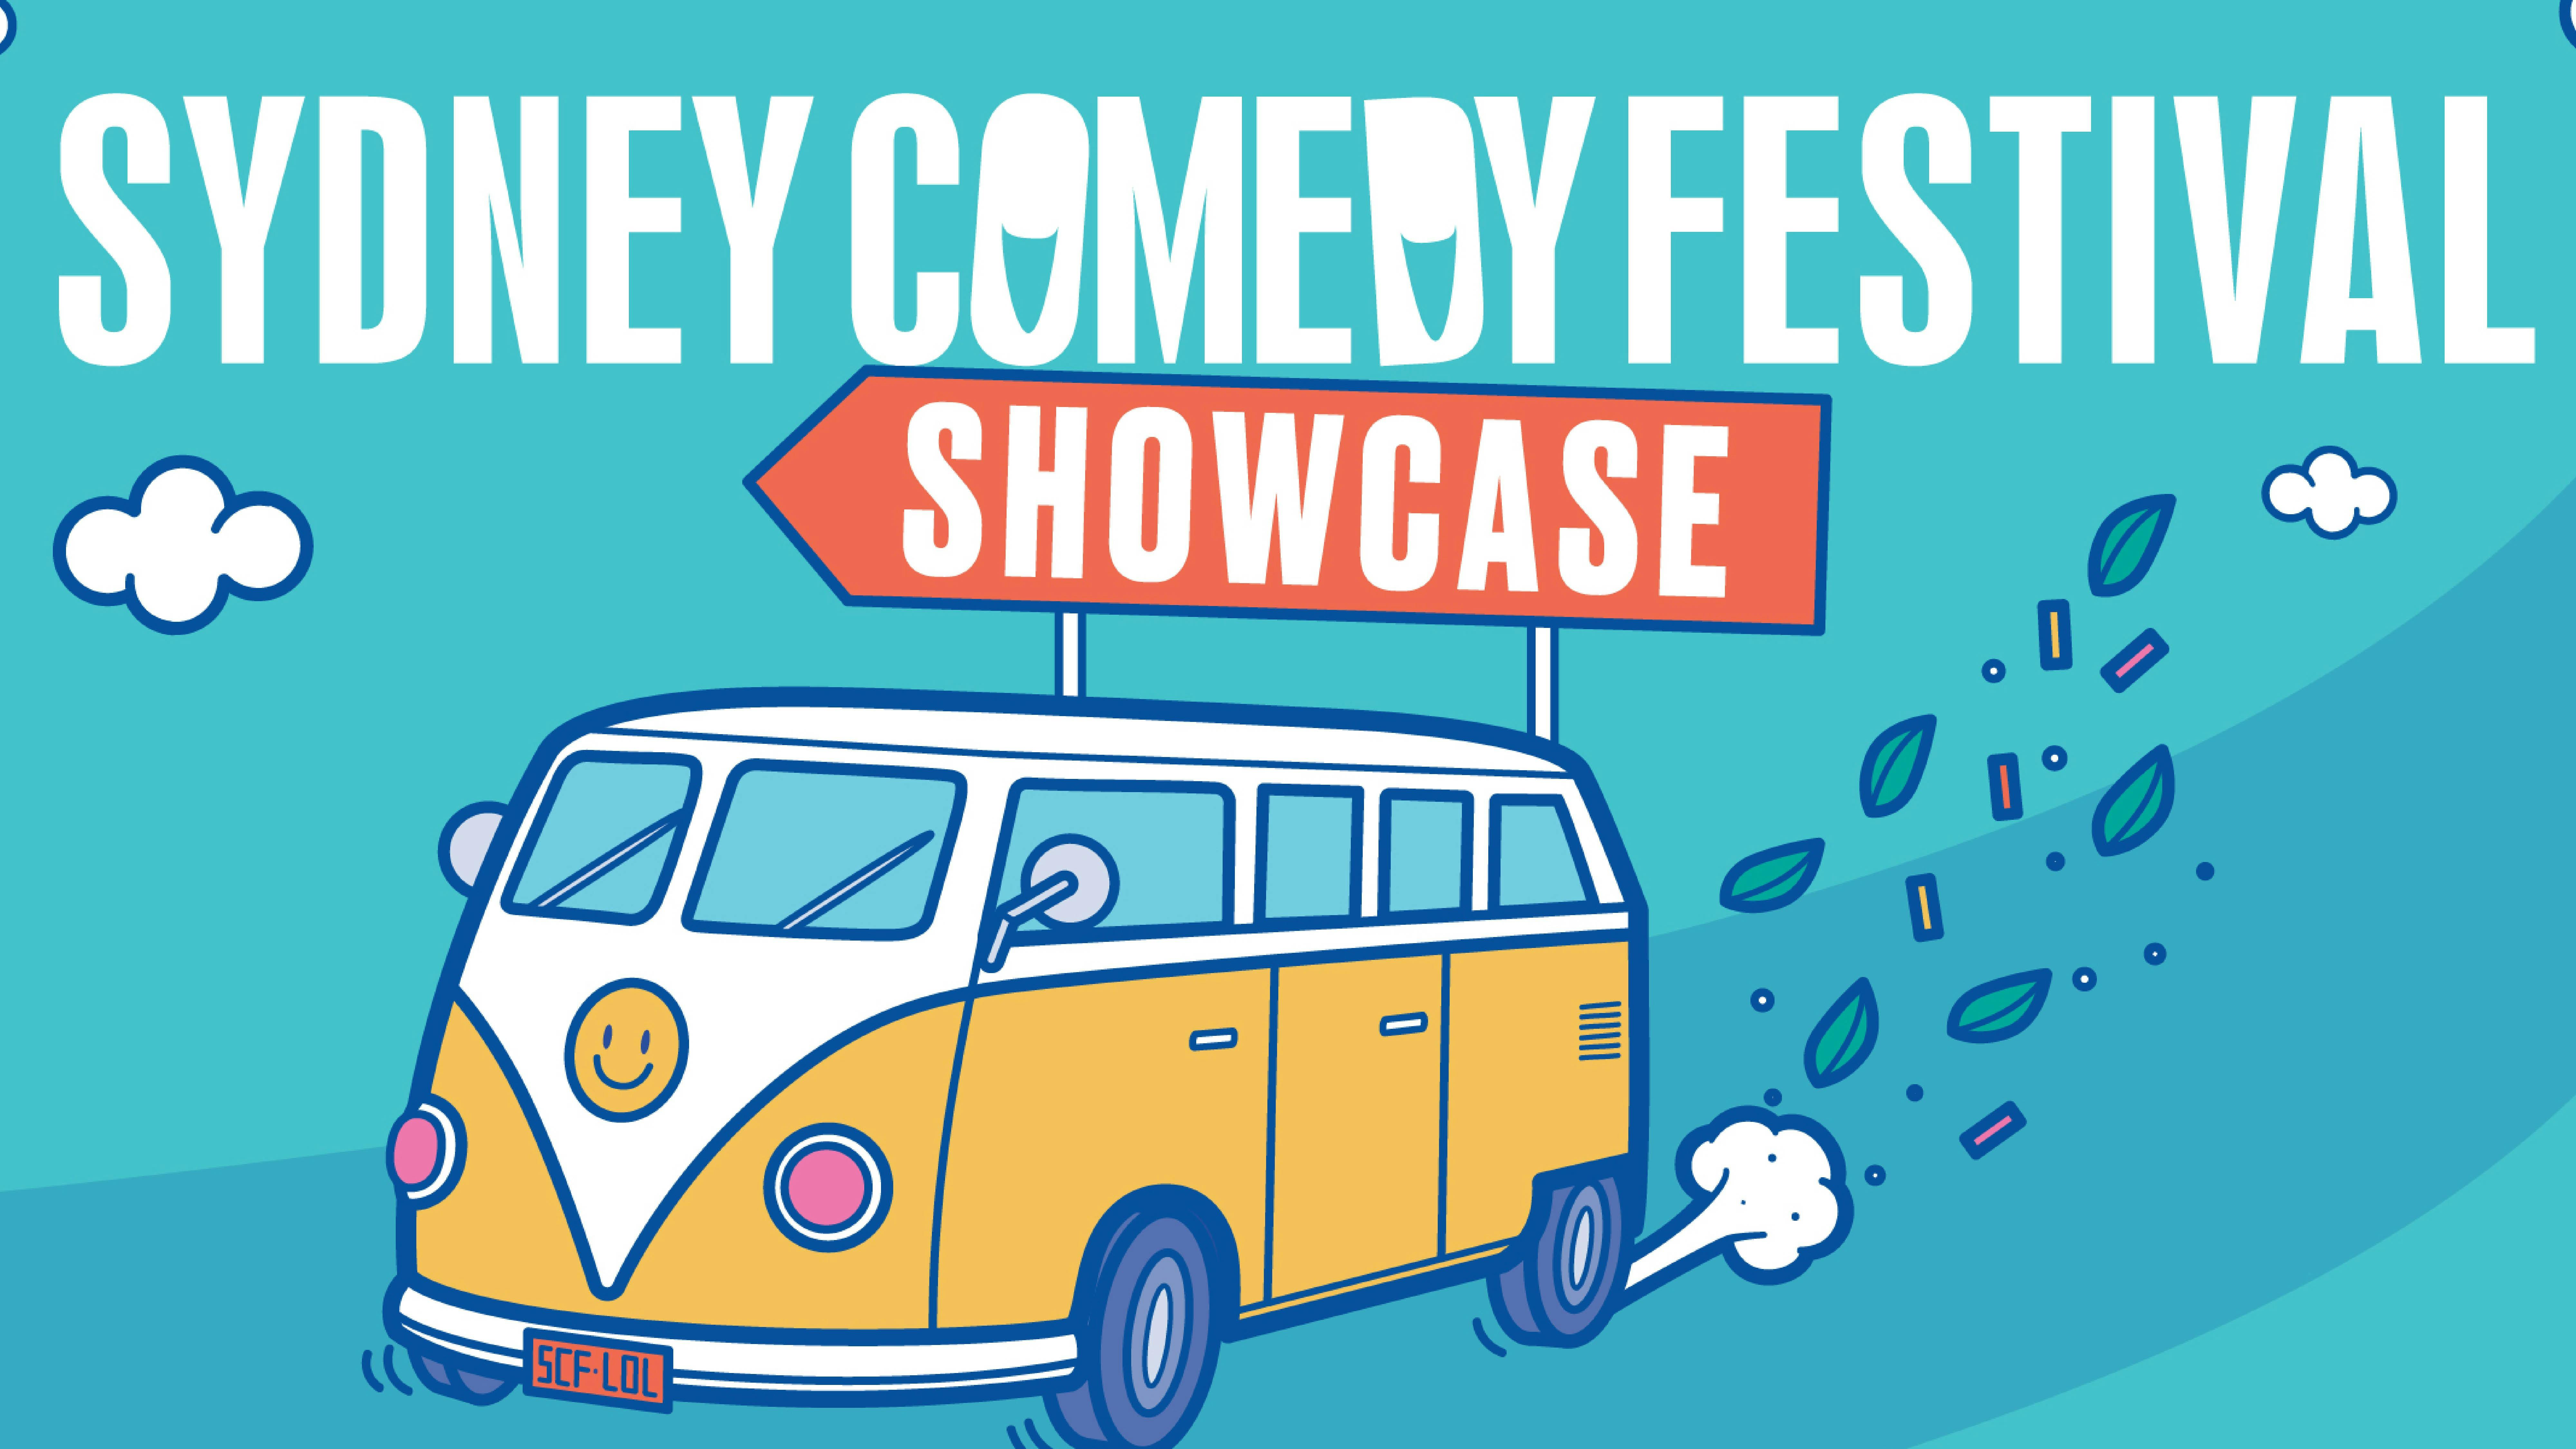 Sydney Comedy Festival Showcase Tour Sydney, Australia Official